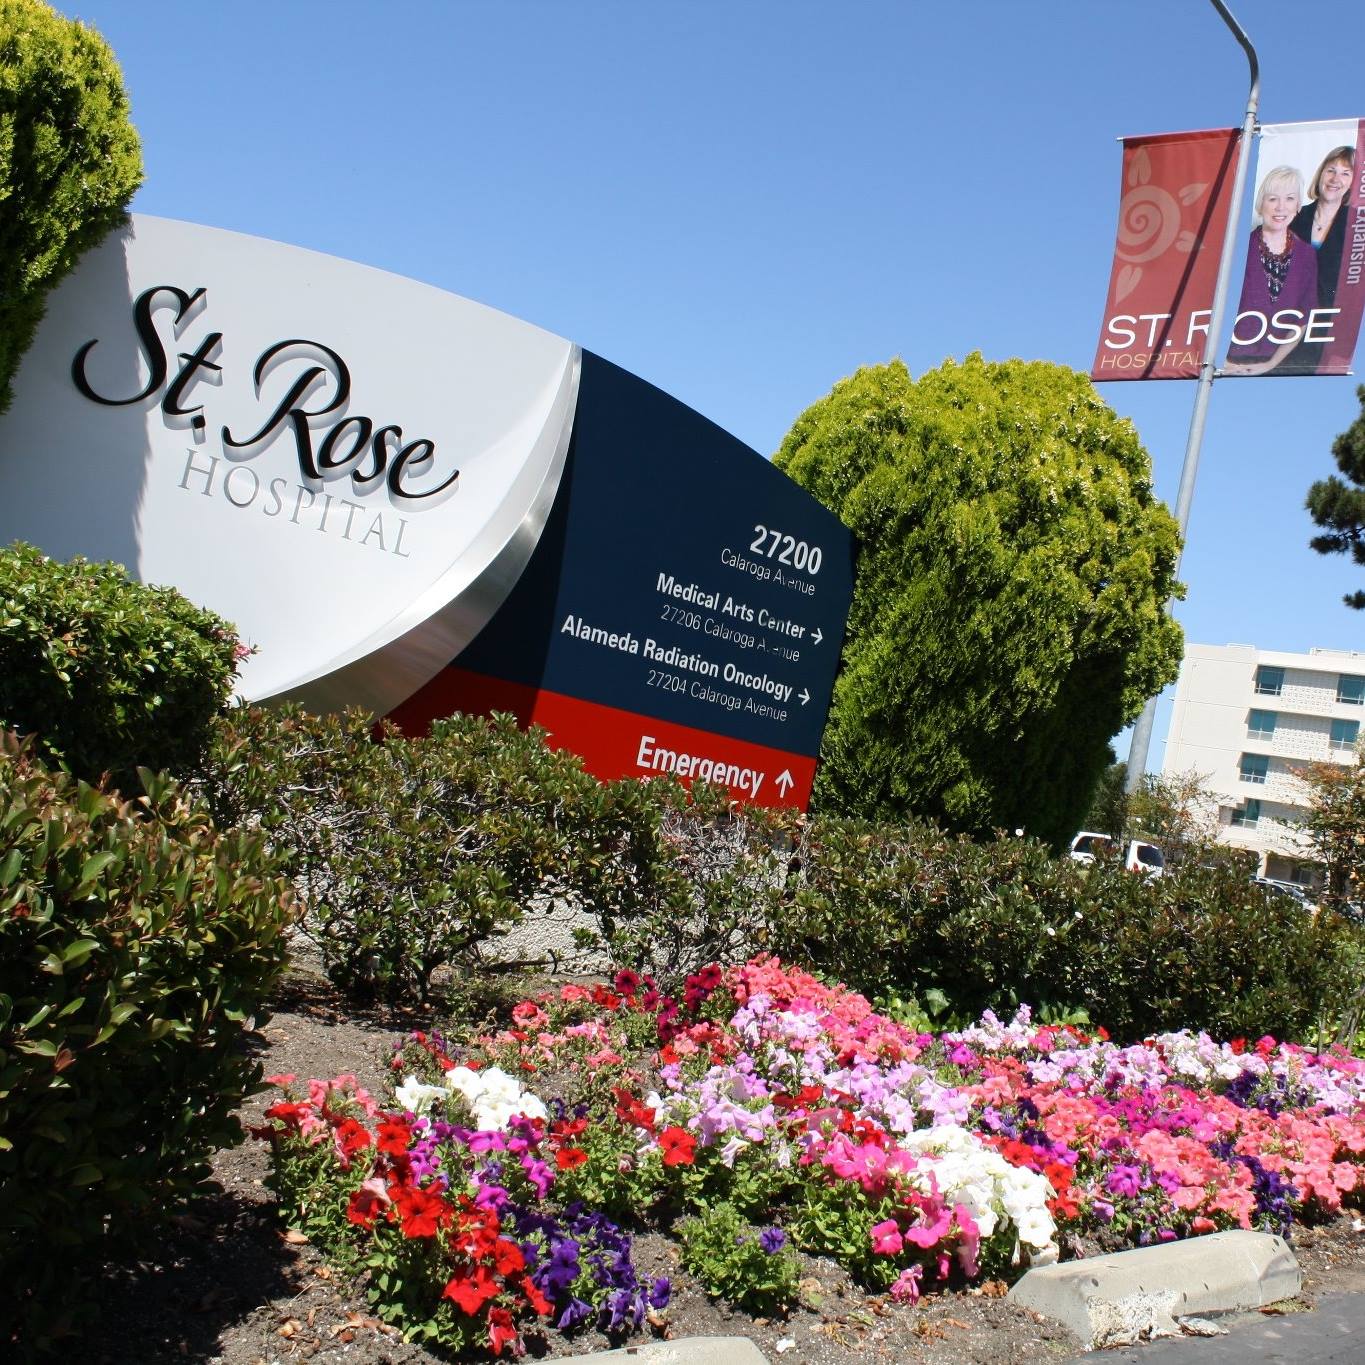 St. Rose Hospital